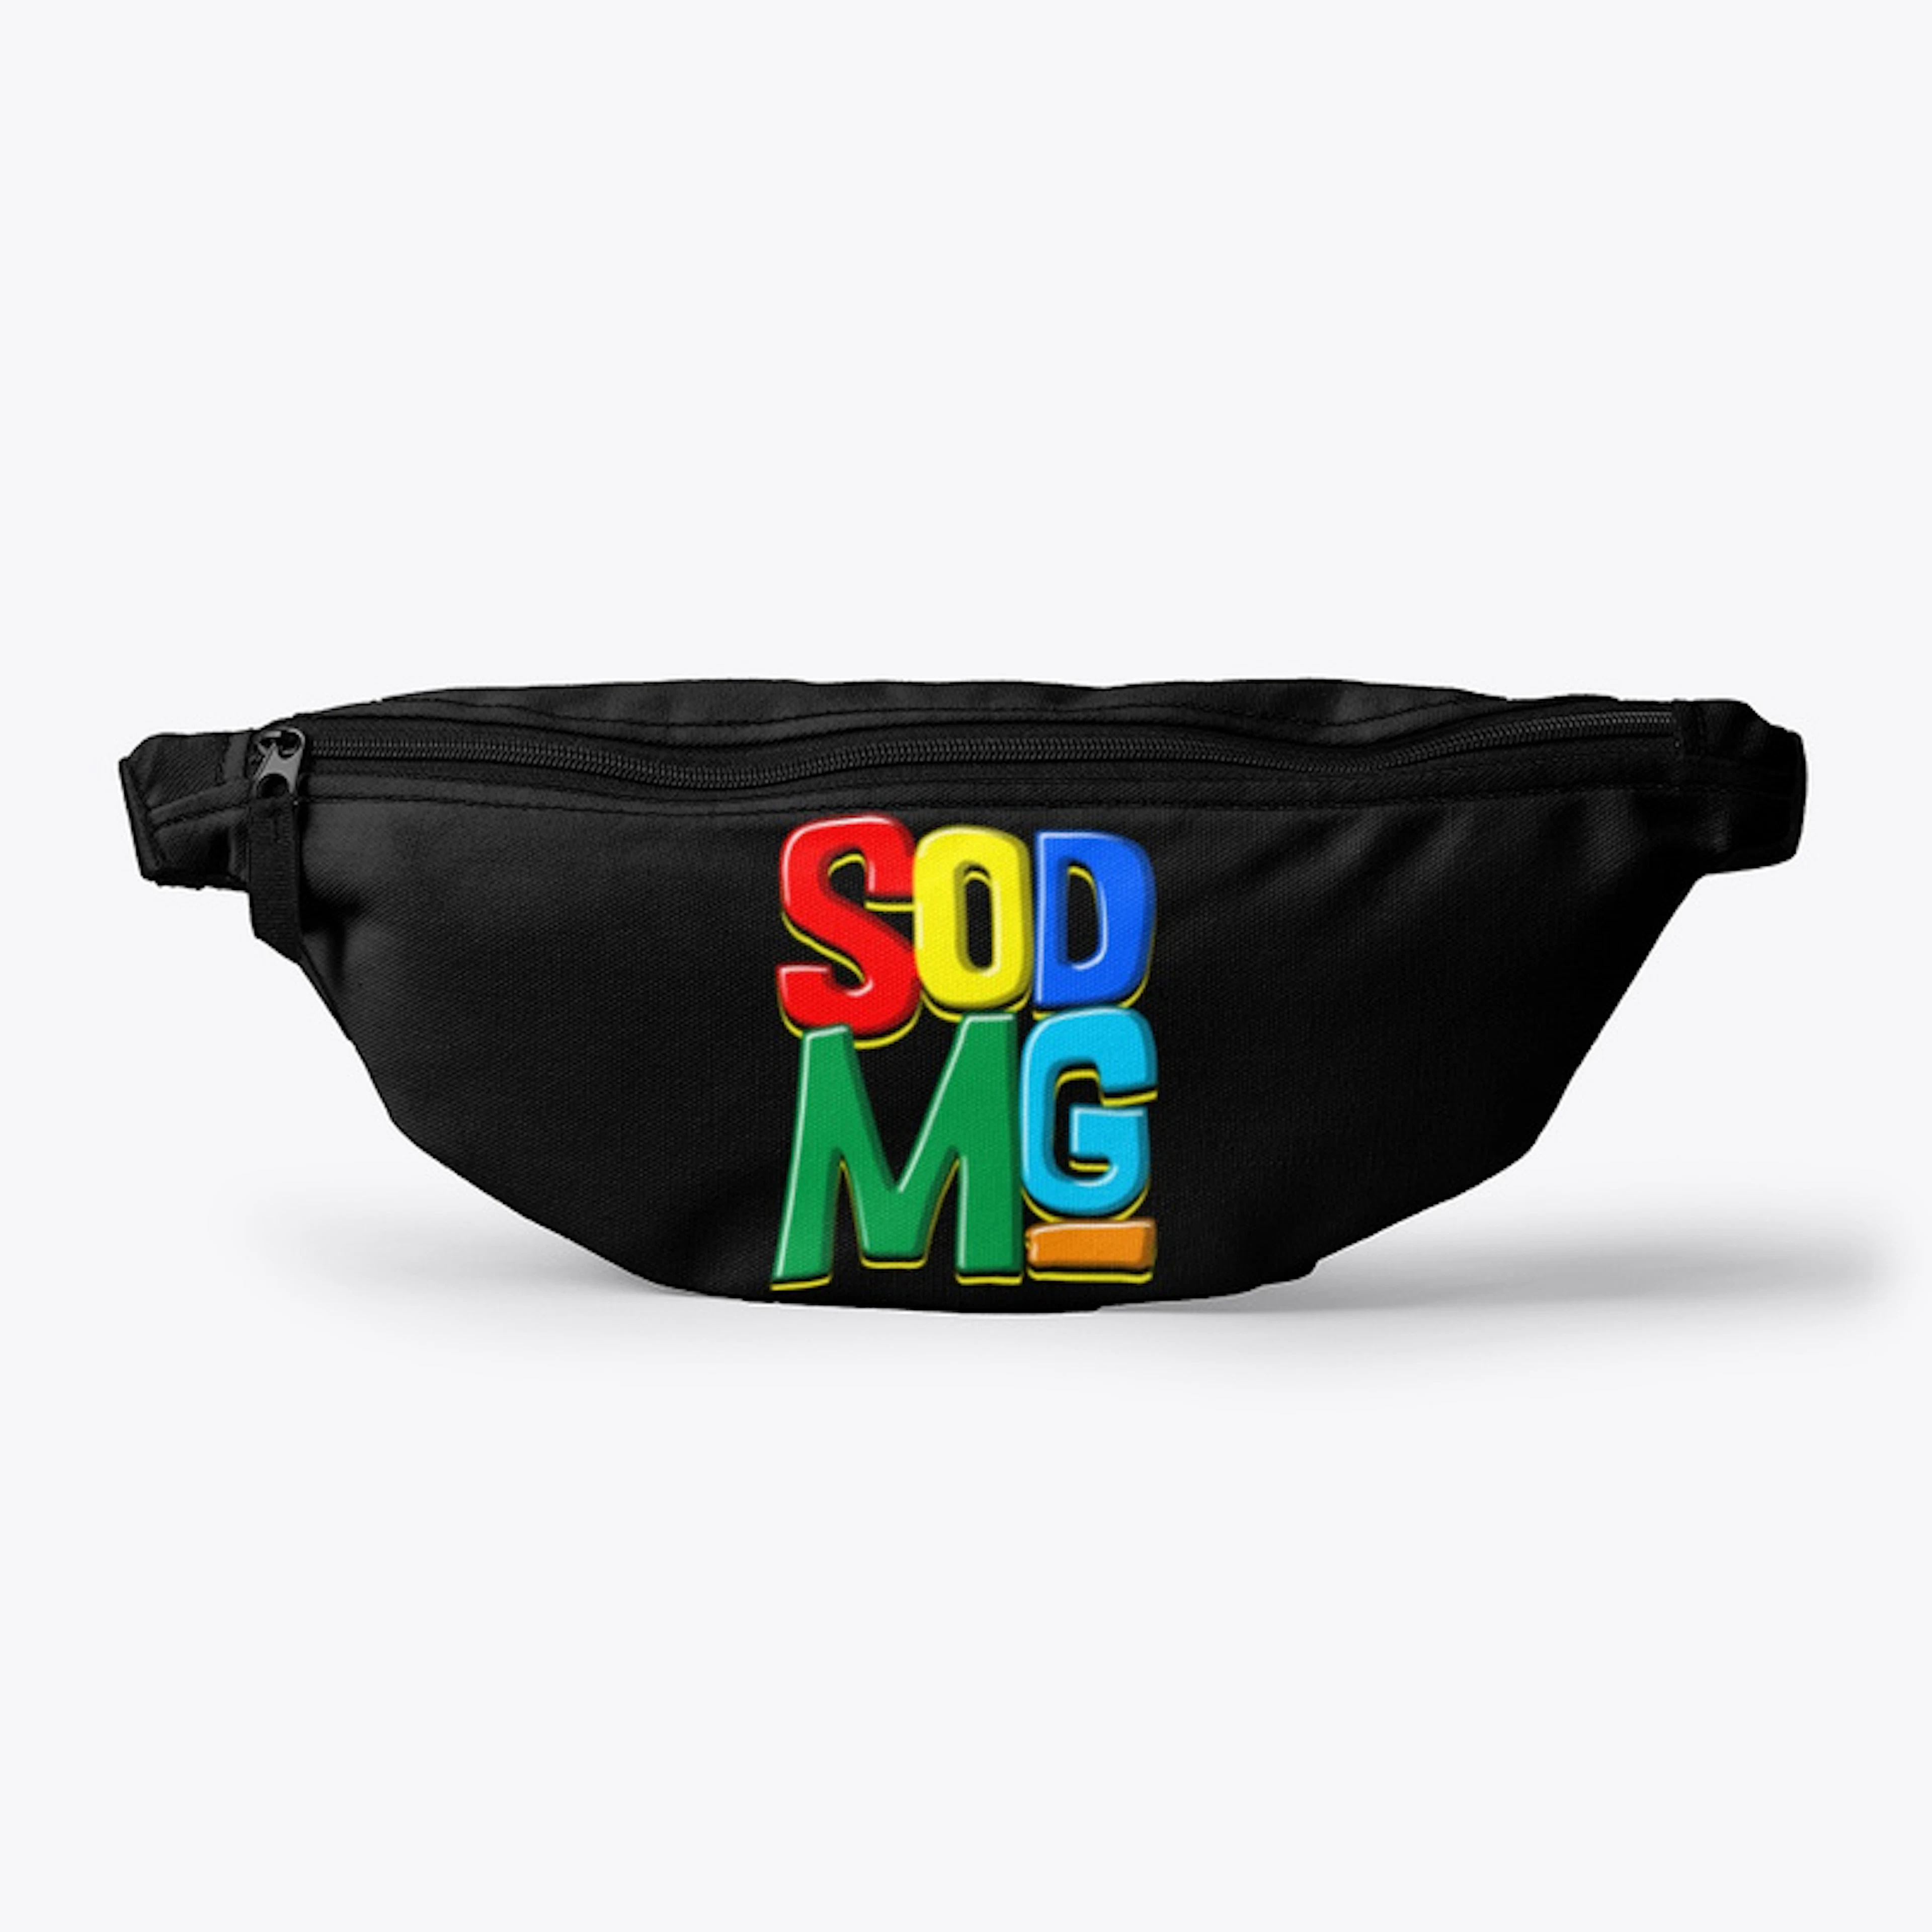 SODMG Trap Bag